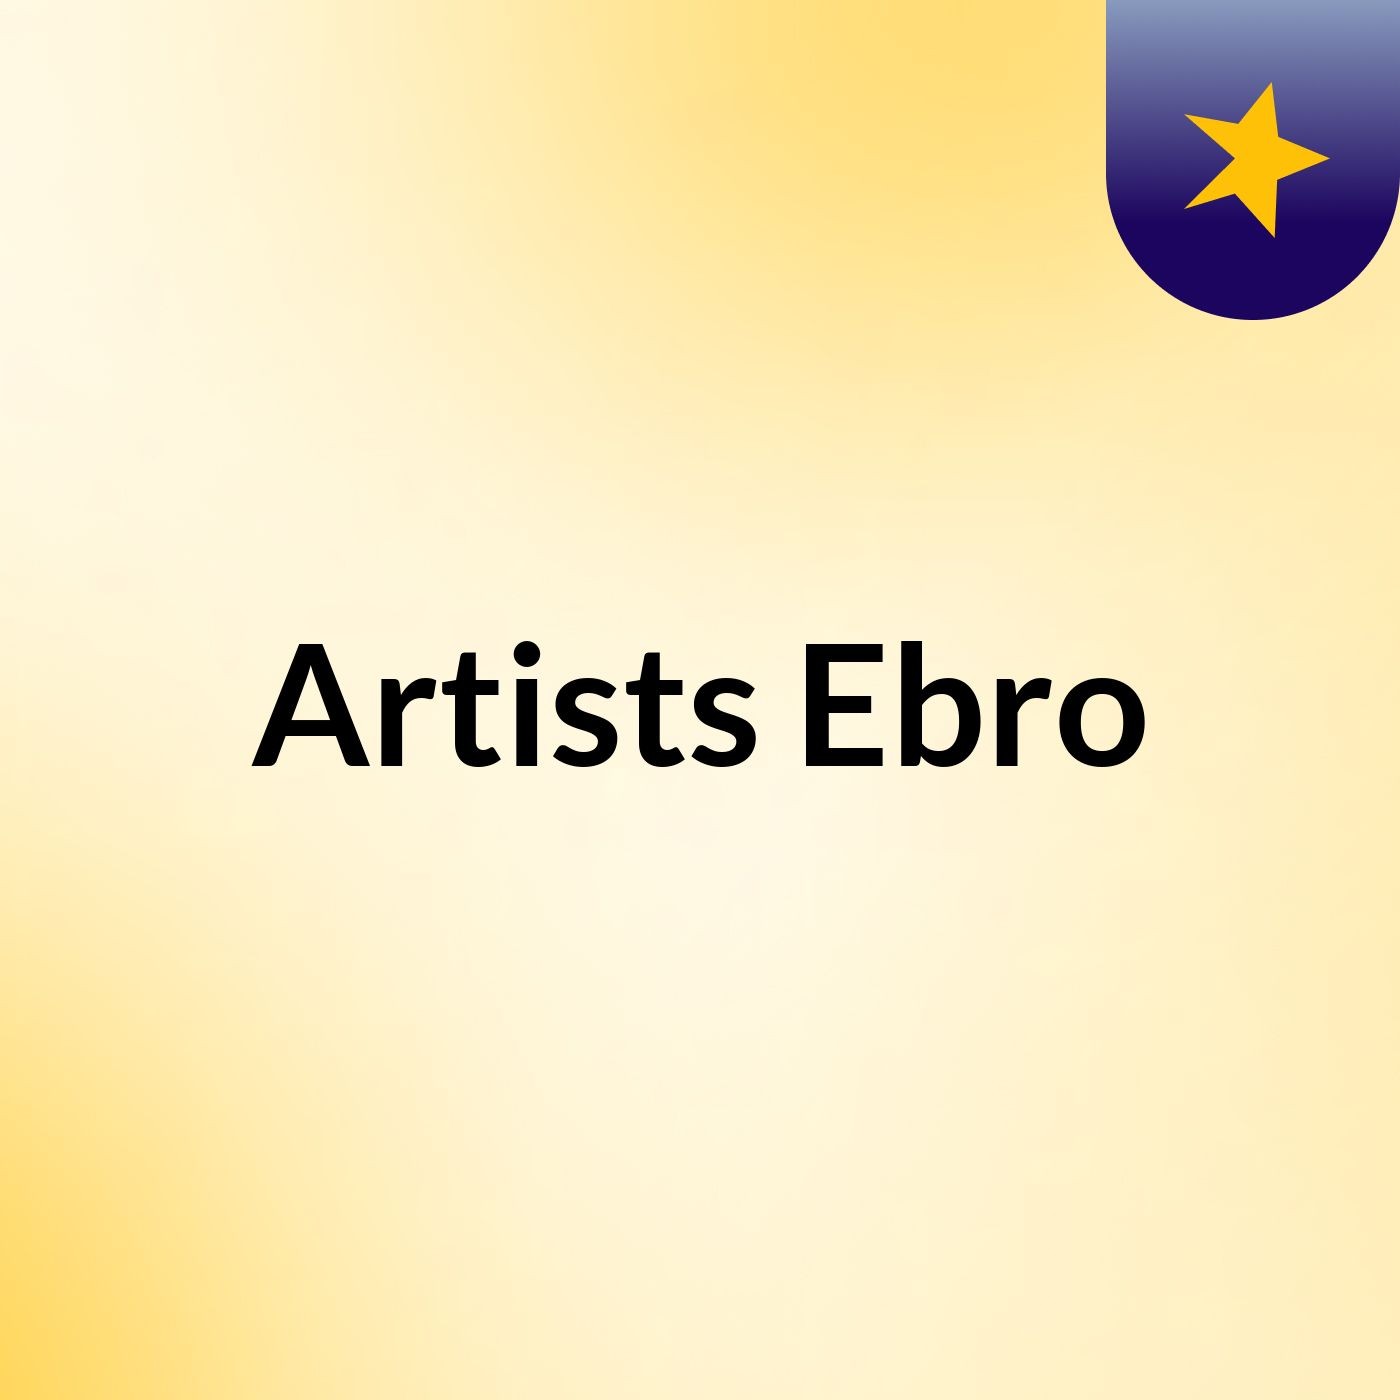 Artists Ebro